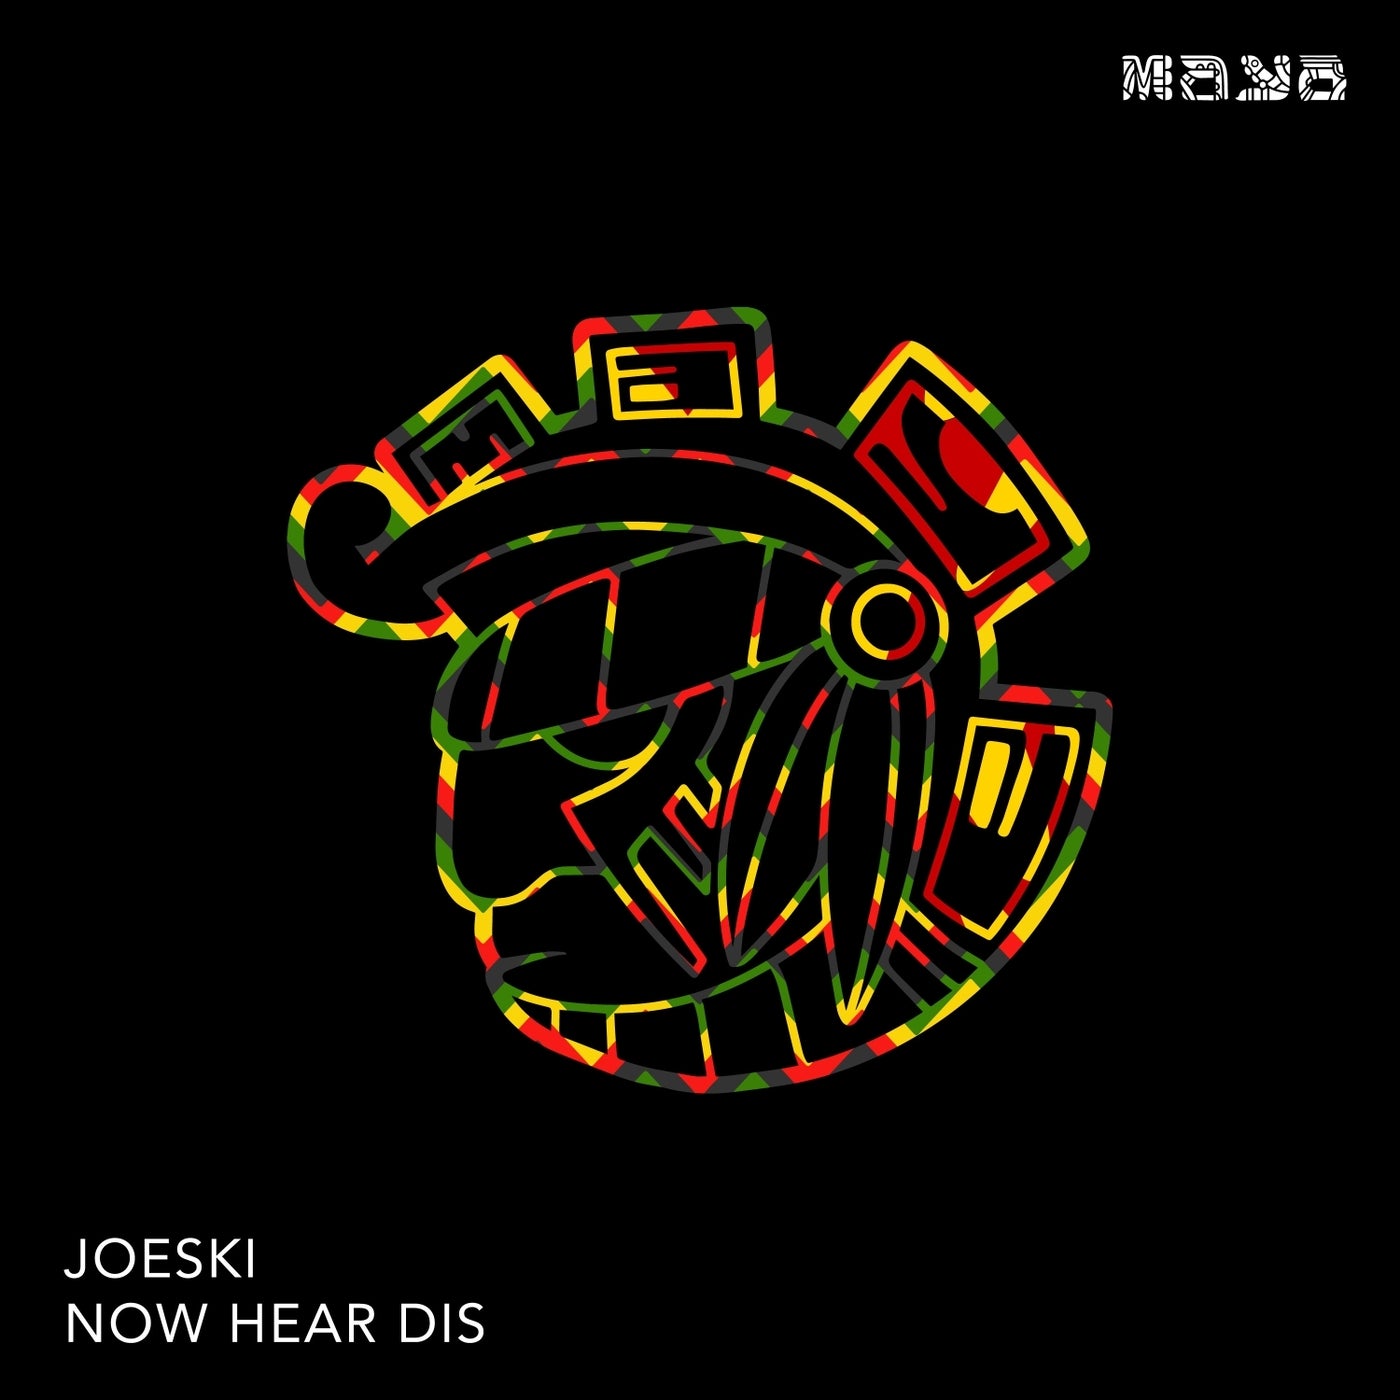 image cover: Joeski - Now Hear Dis (Original) on Maya Records